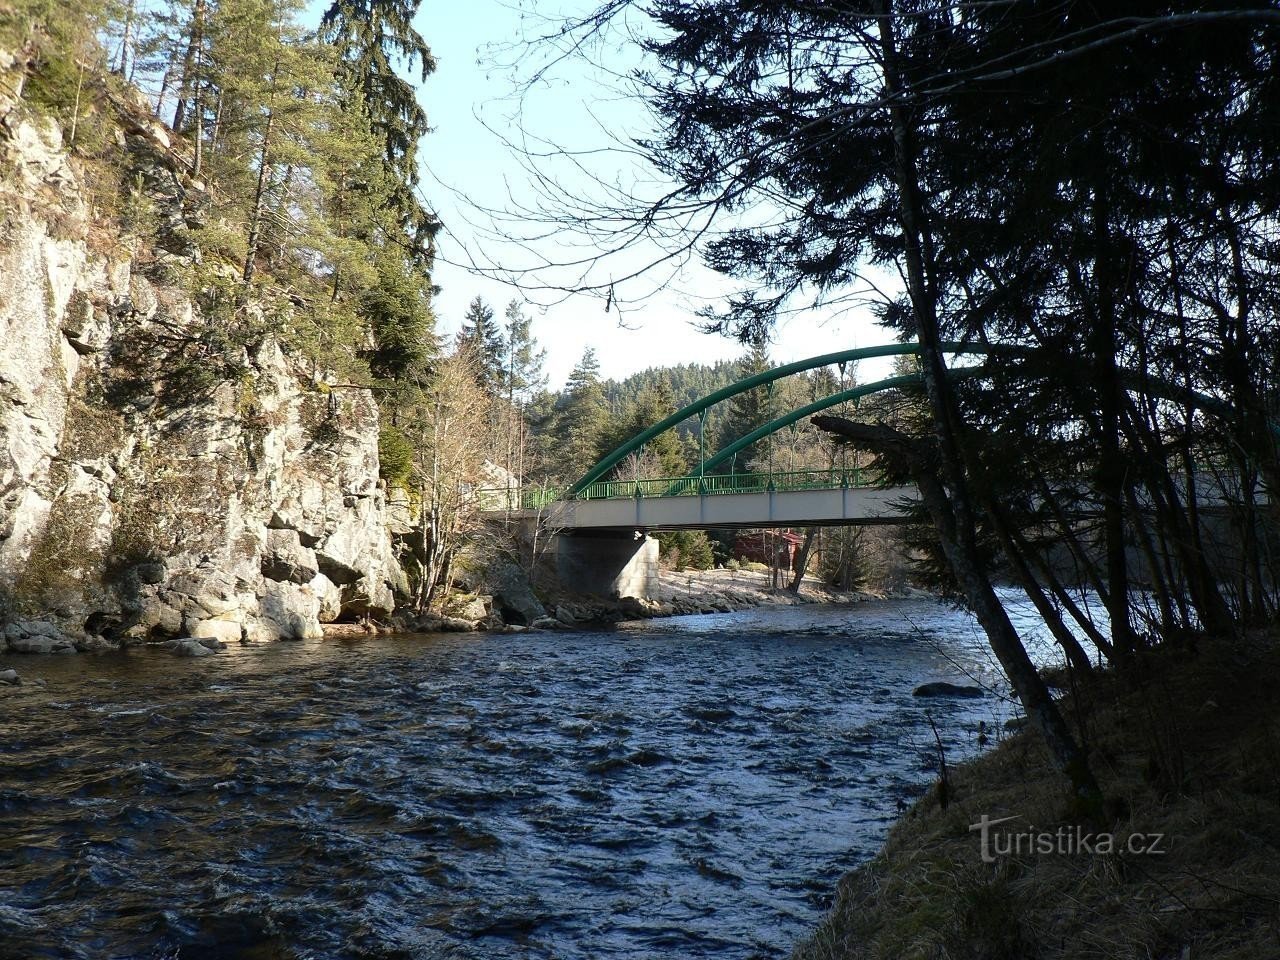 Bro över Otava nära Annín